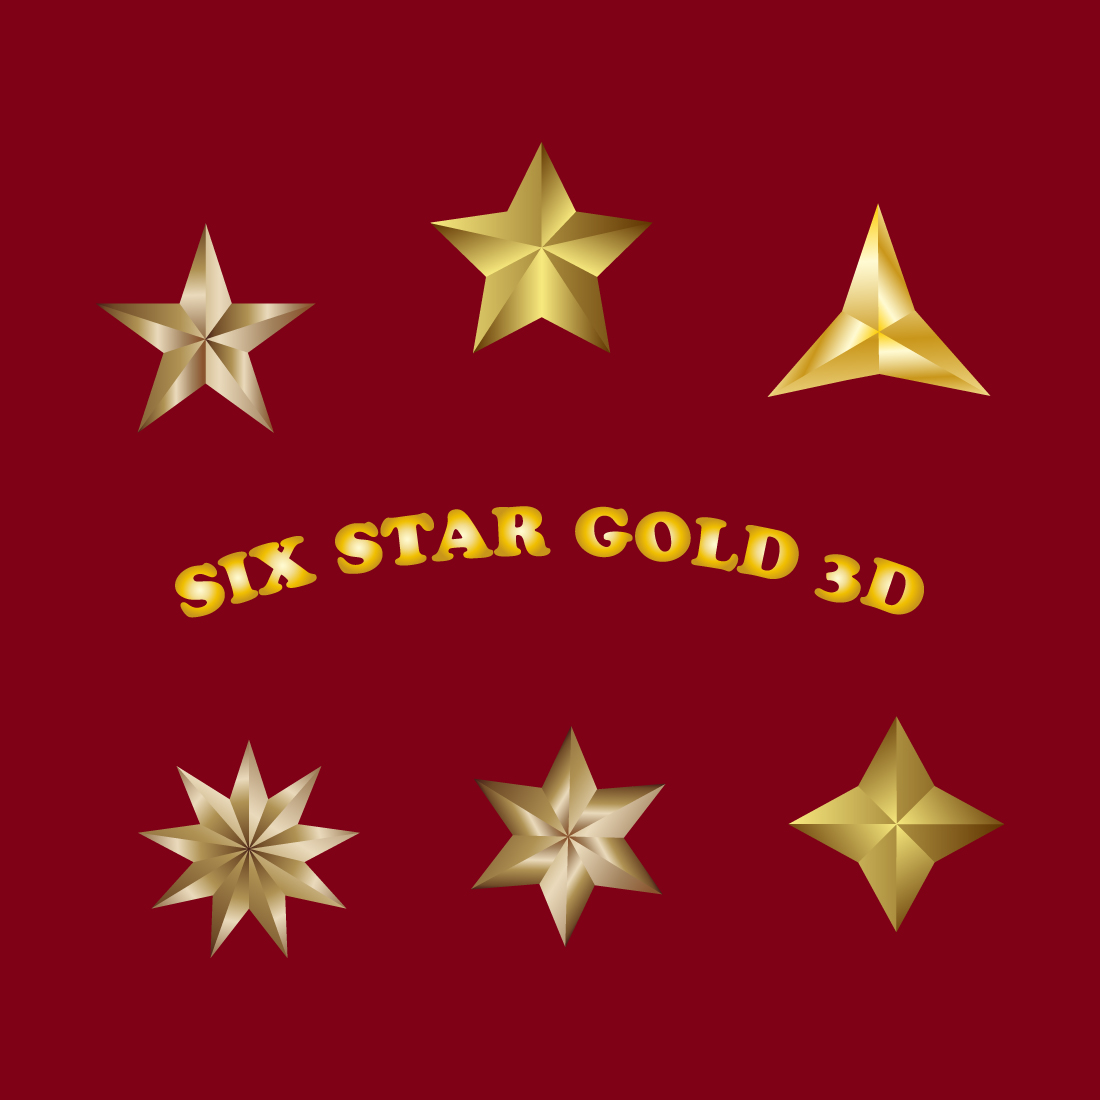 Gold Star 3d Illustrations Description.